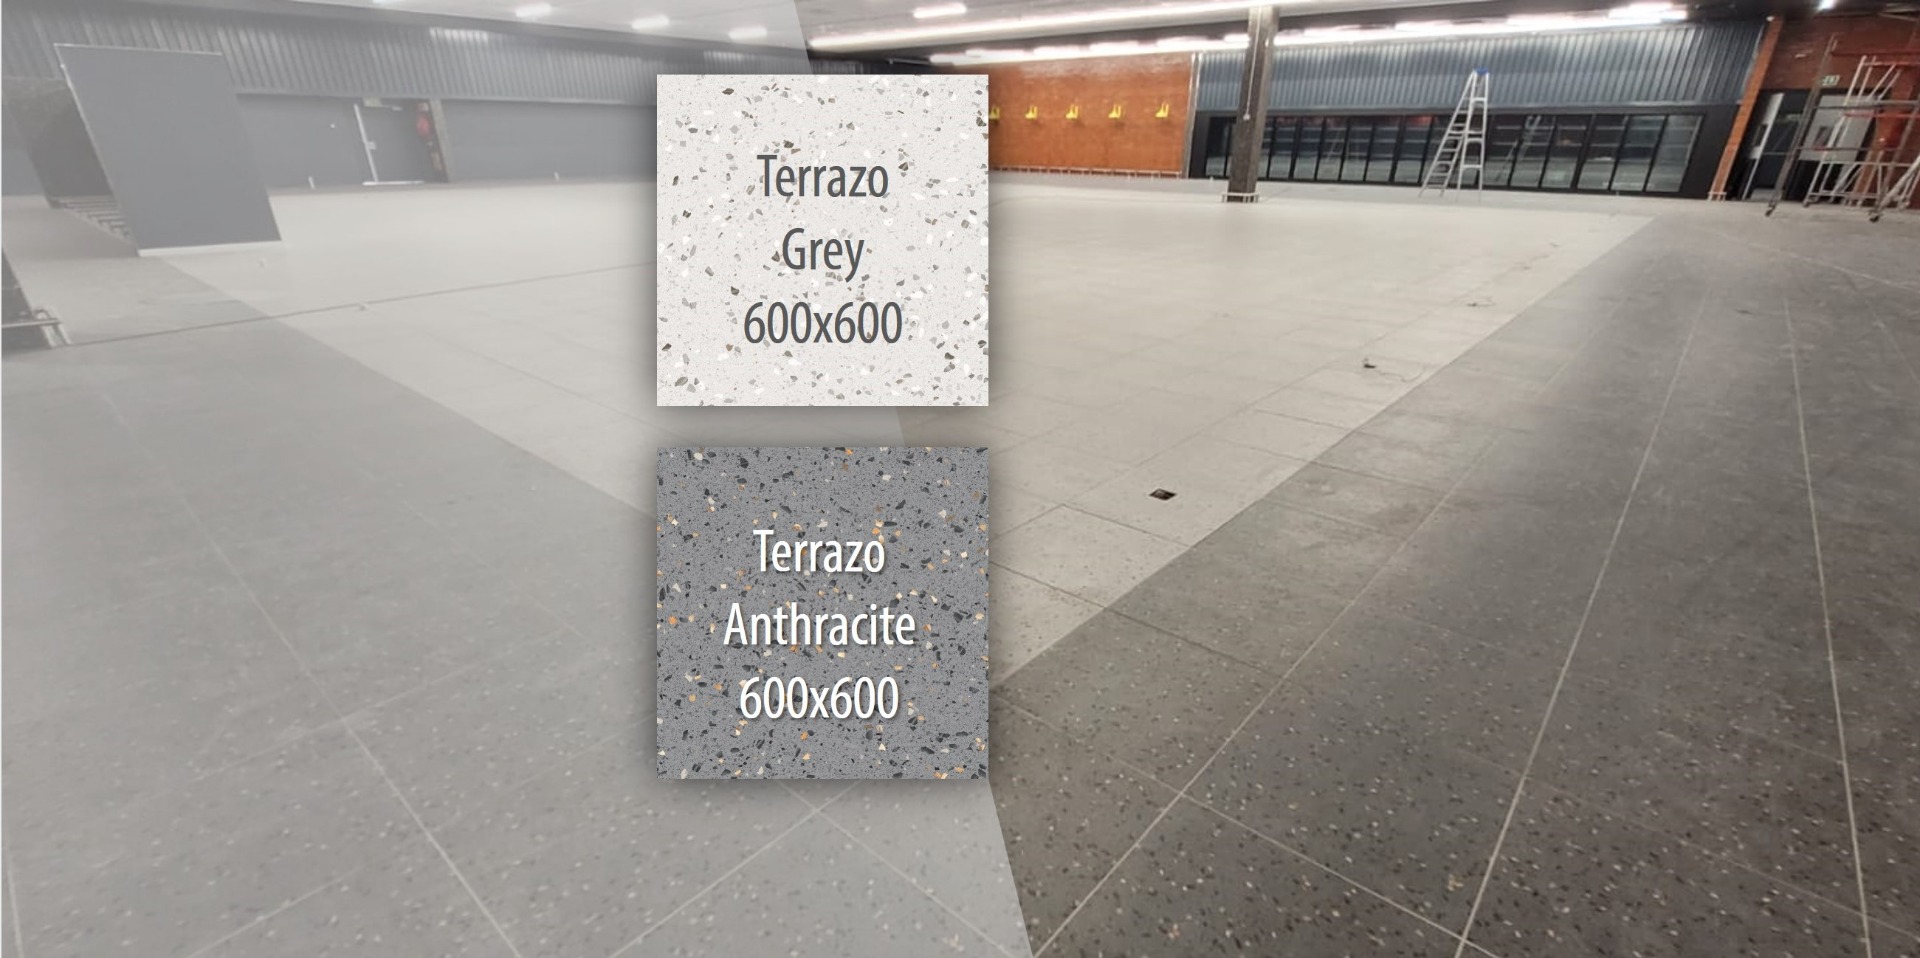 Terrazo Grey versus Terrazo Anthracite